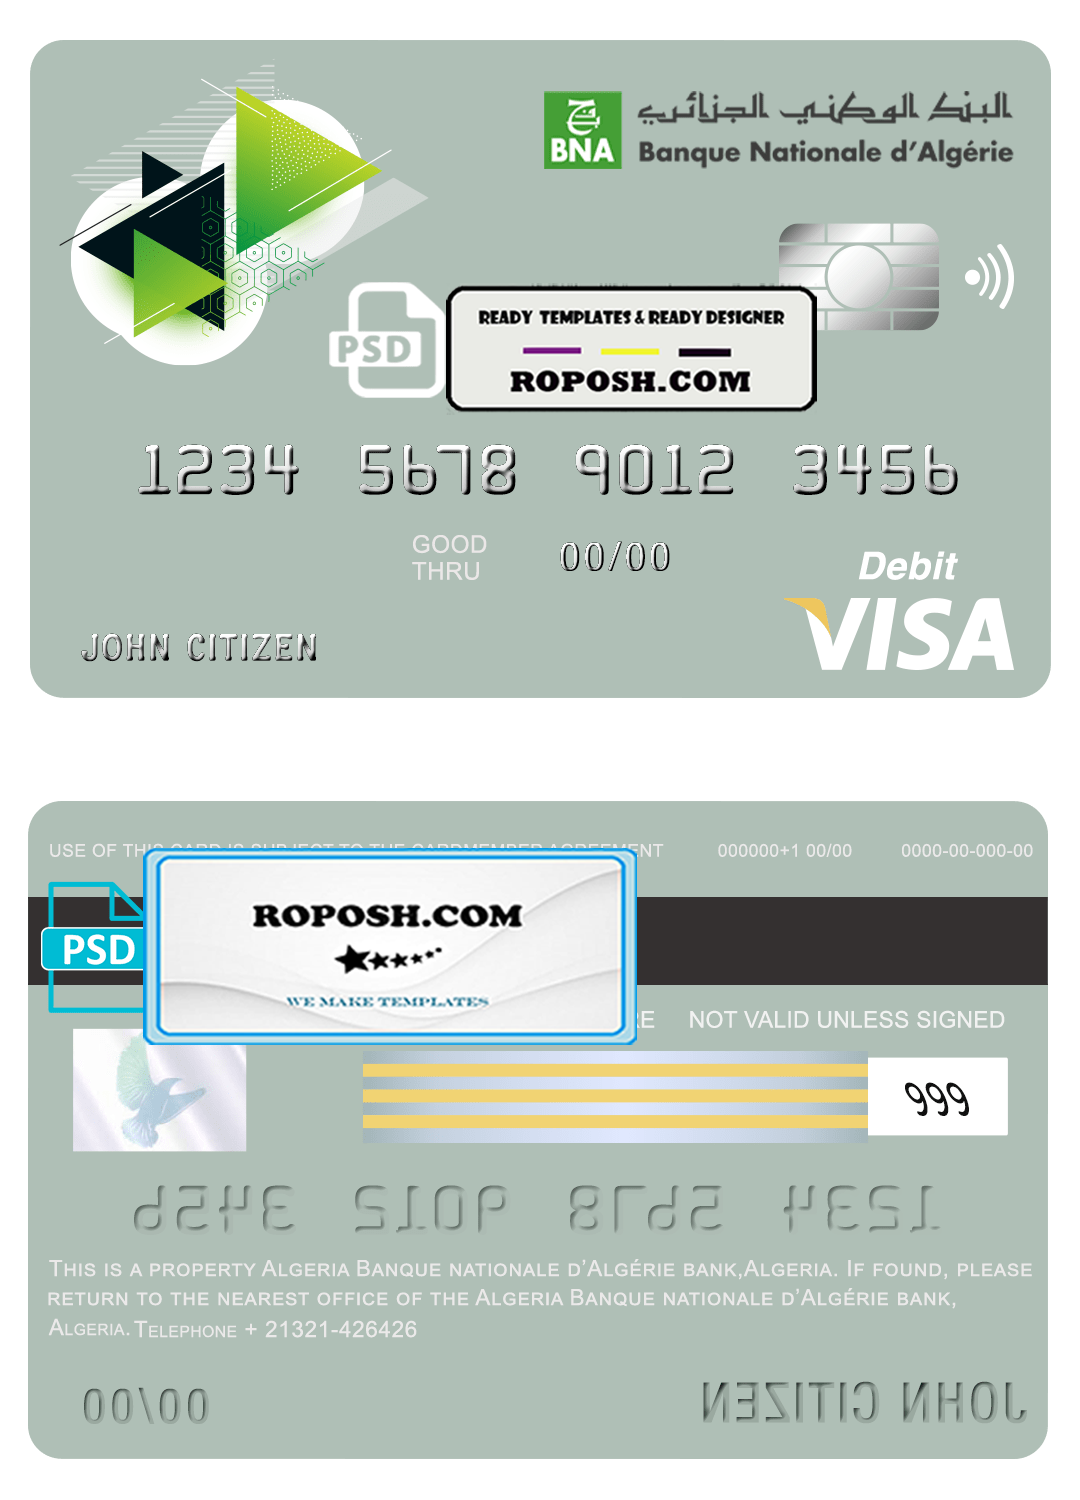 Algeria Banque nationale d’Algérie (BNA) bank visa card debit card